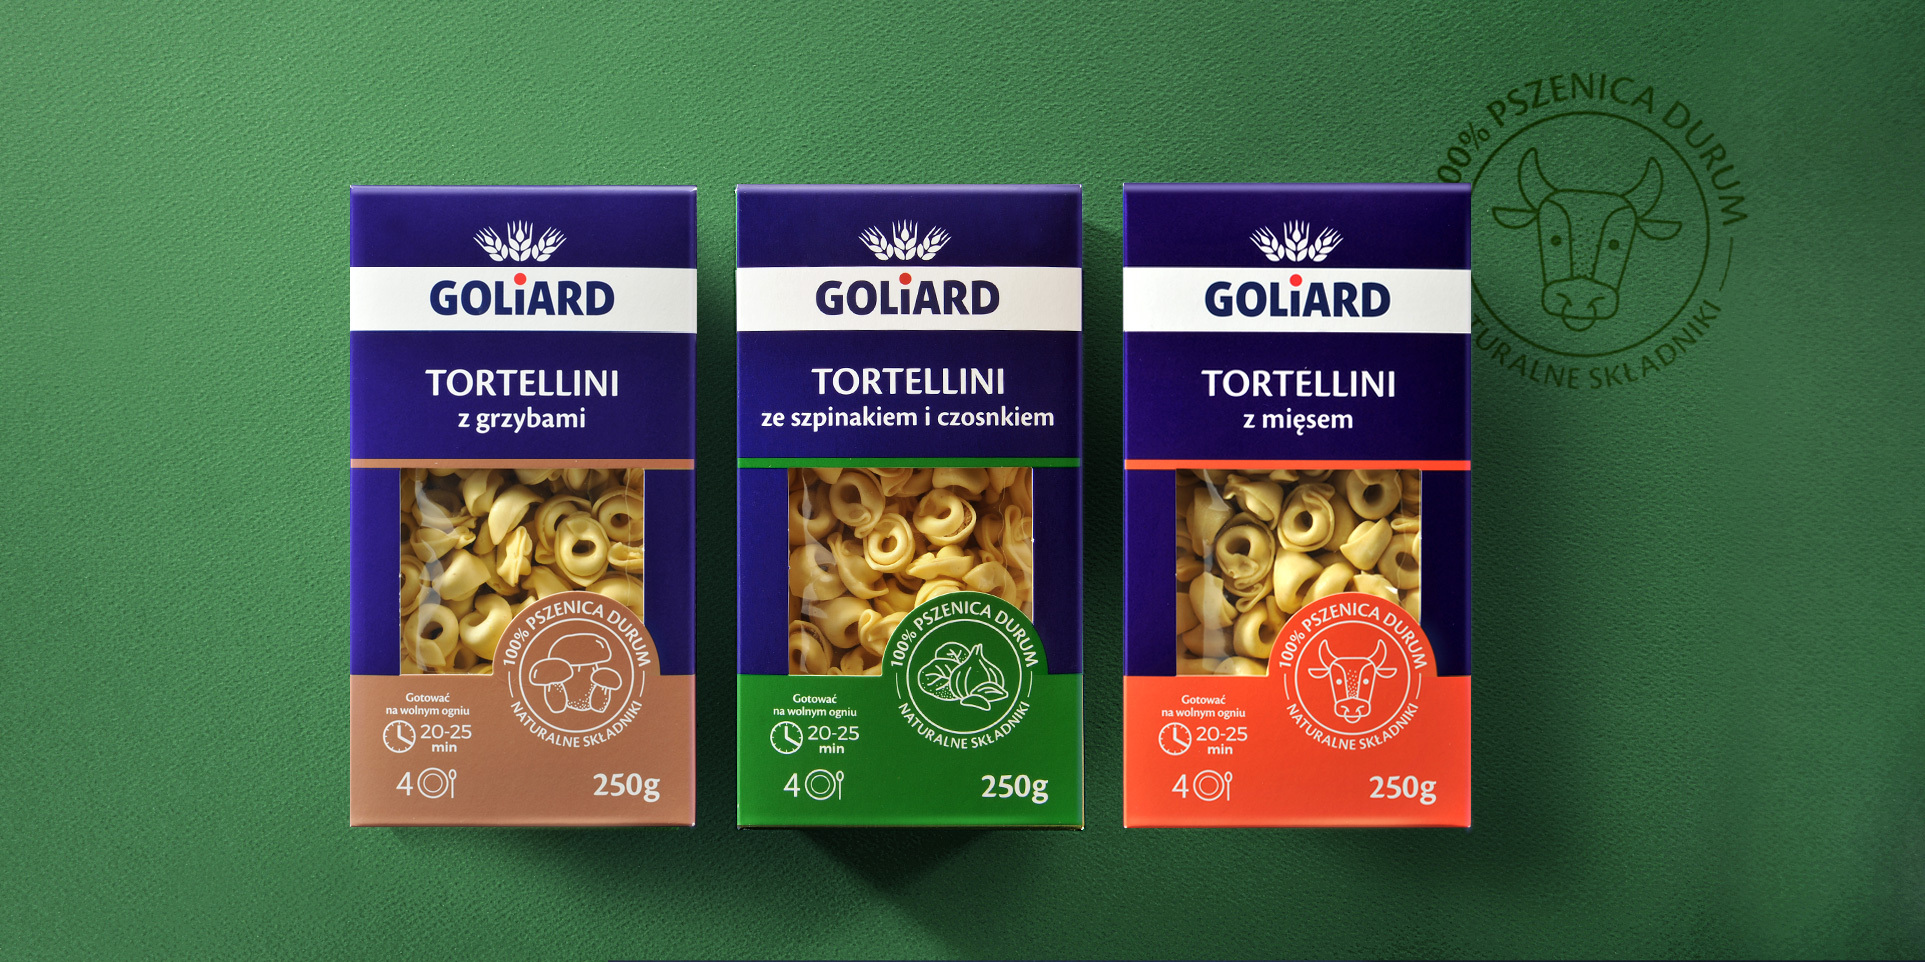 Pasta packaging design for Goliard - tortellini line.